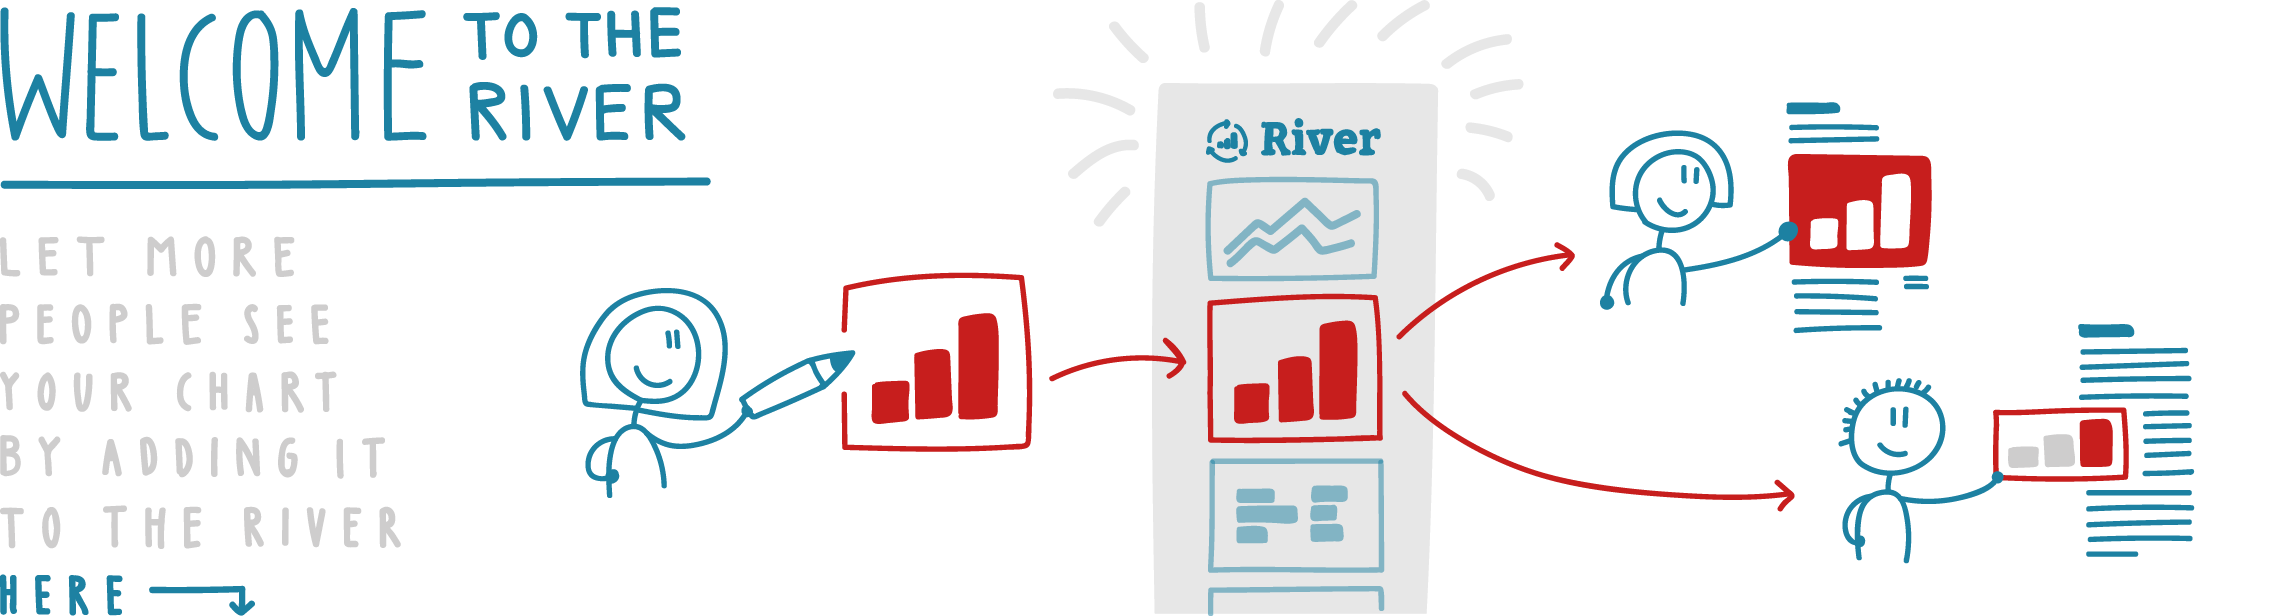 river illustration